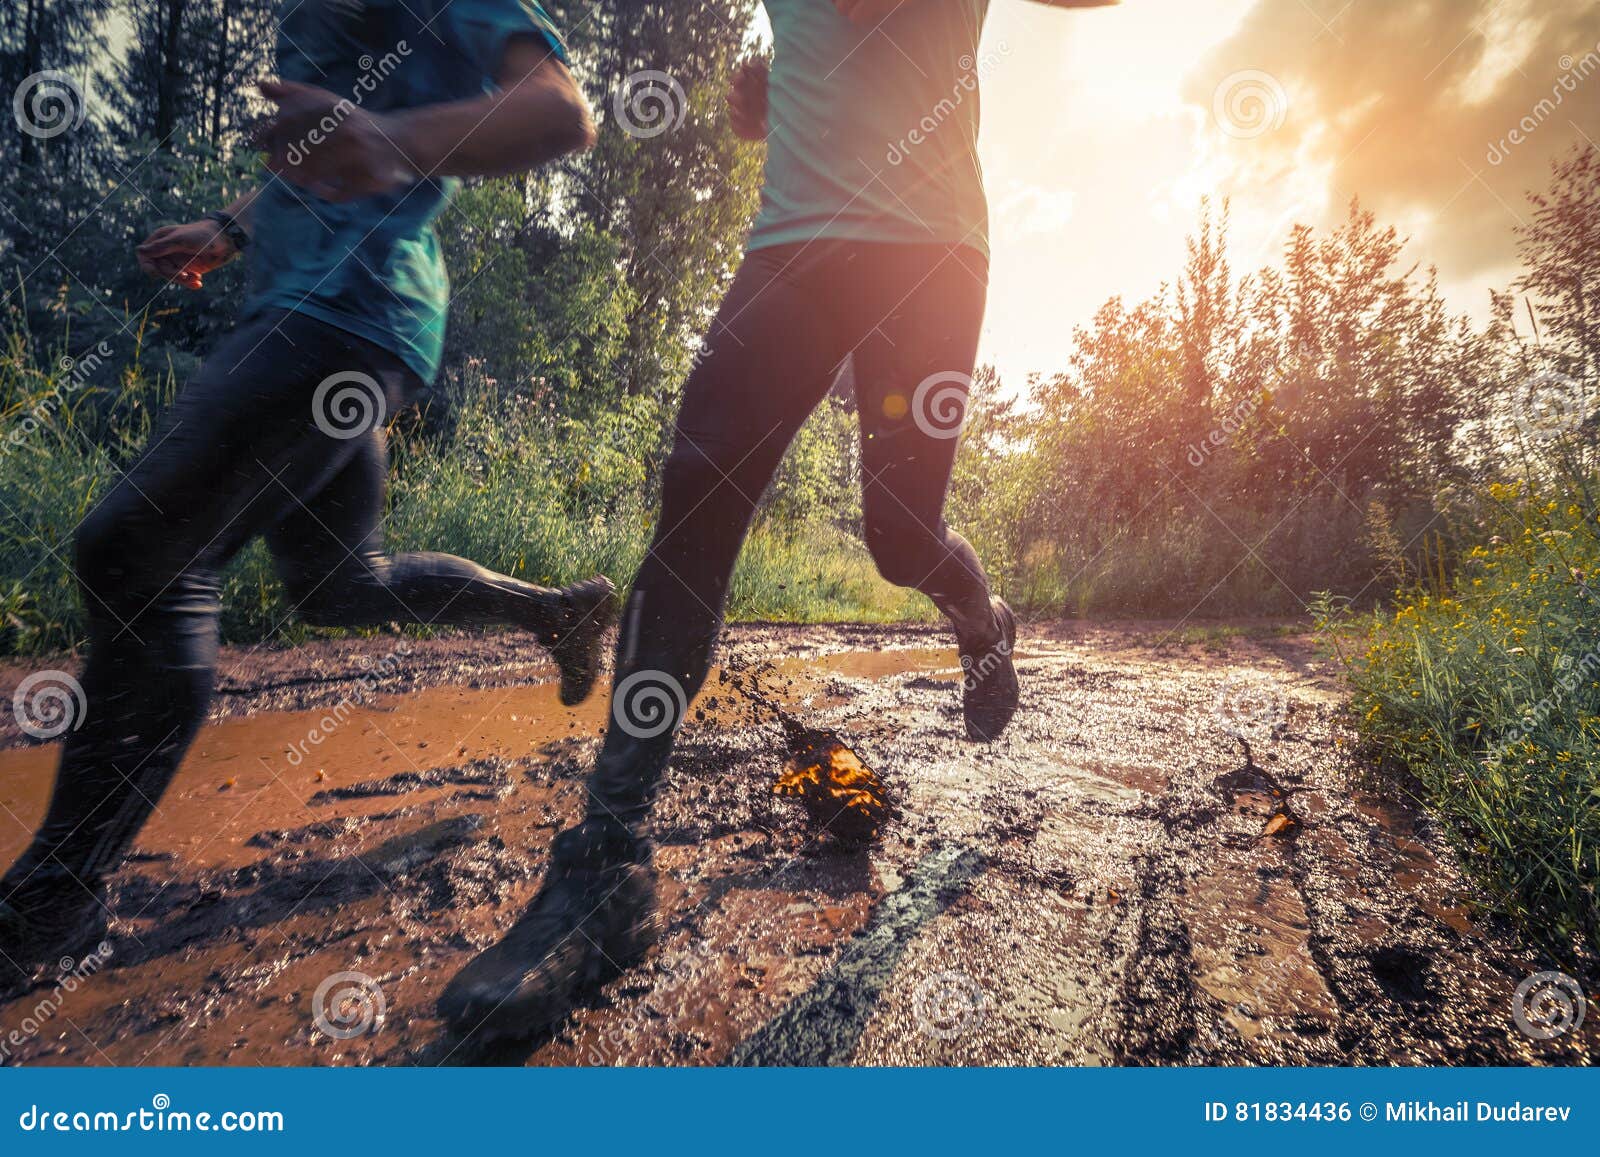 trail running